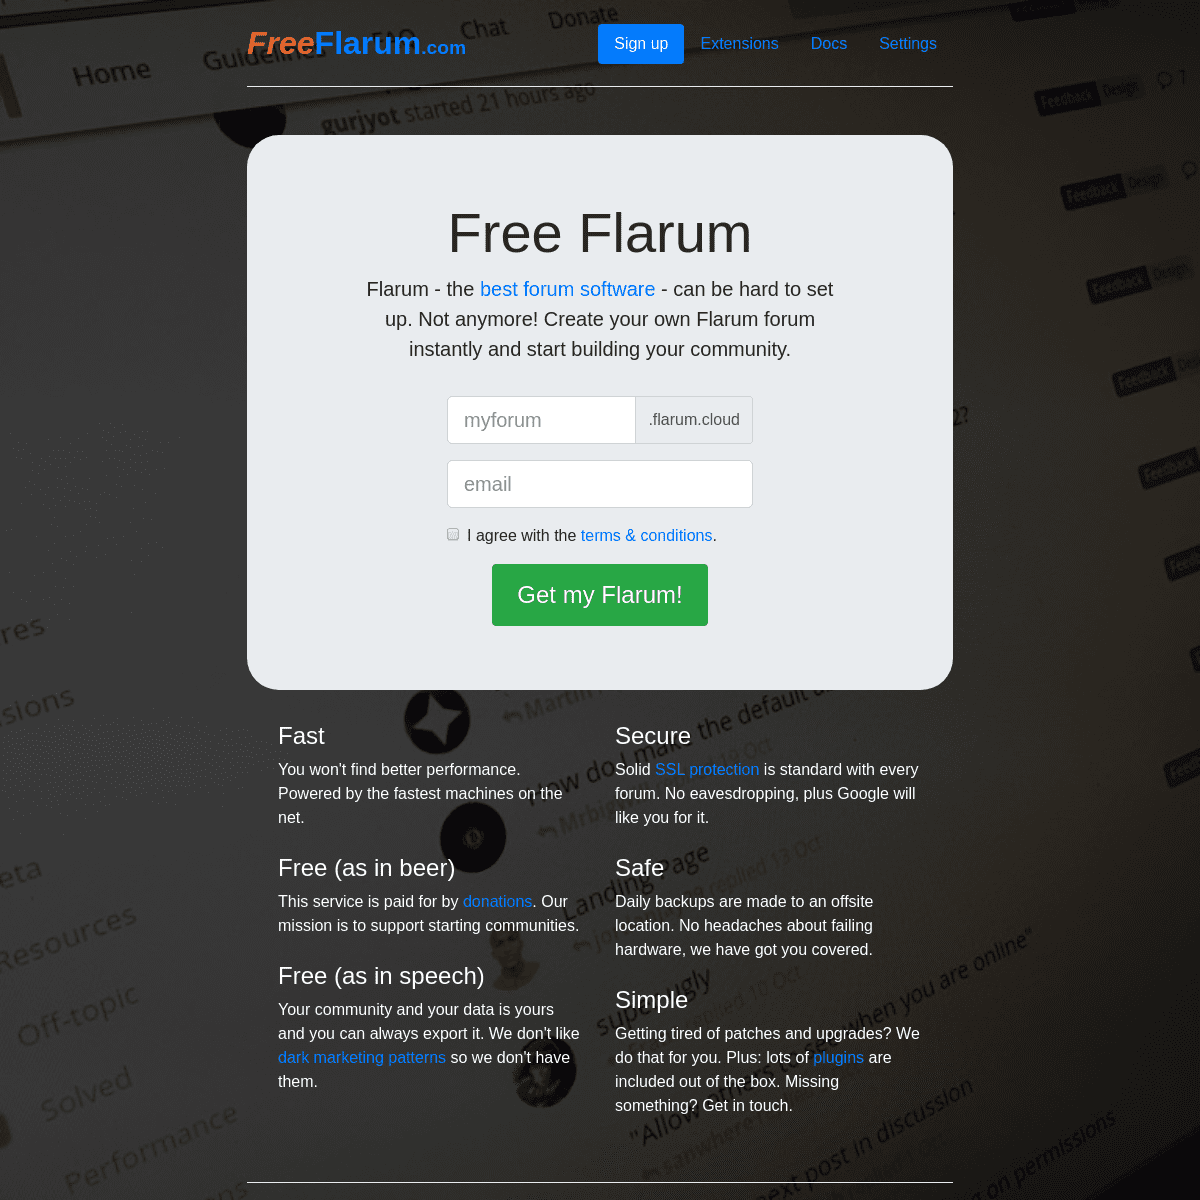 A complete backup of freeflarum.com